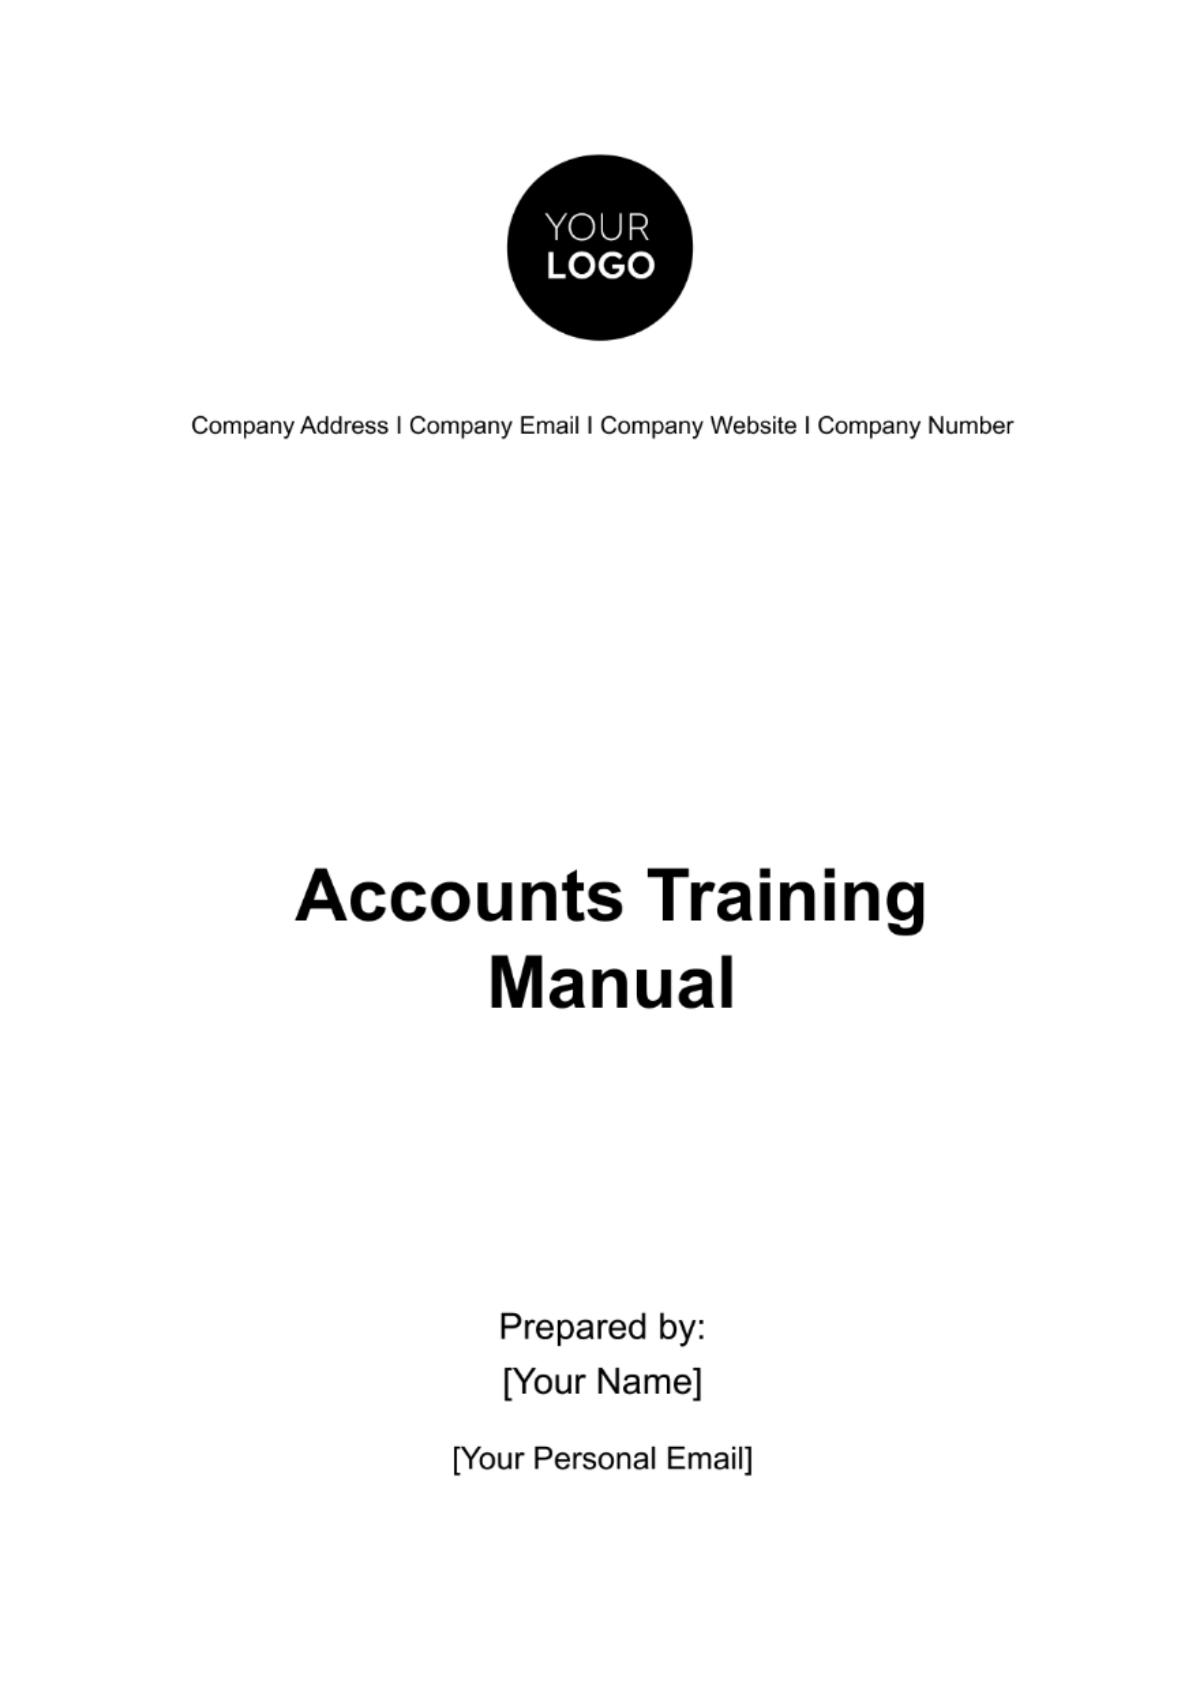 Accounts Training Manual Template